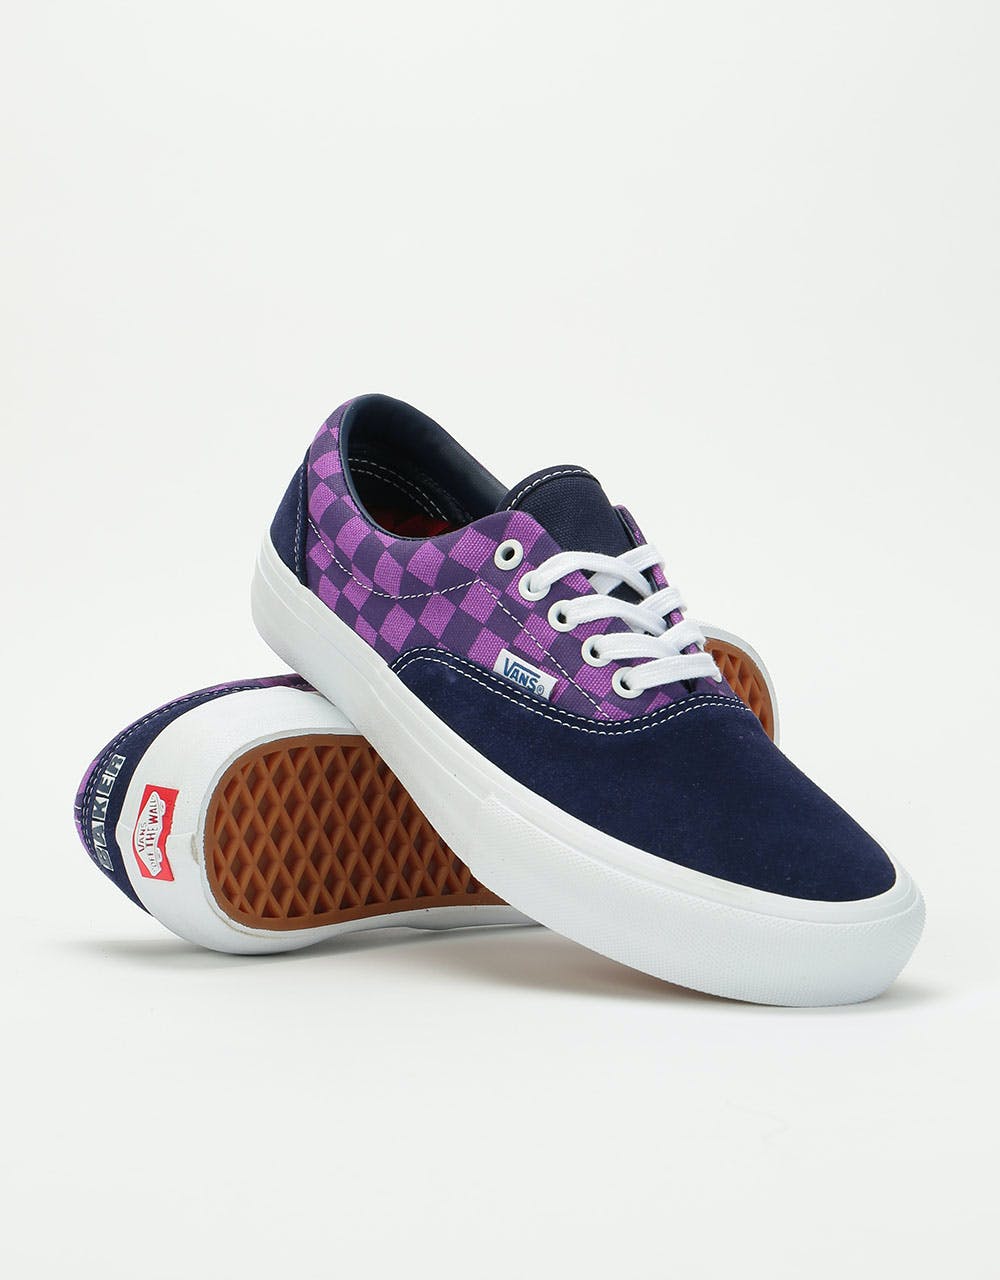 Vans Era Pro Skate Shoes - (Baker) Kader/Purple Check